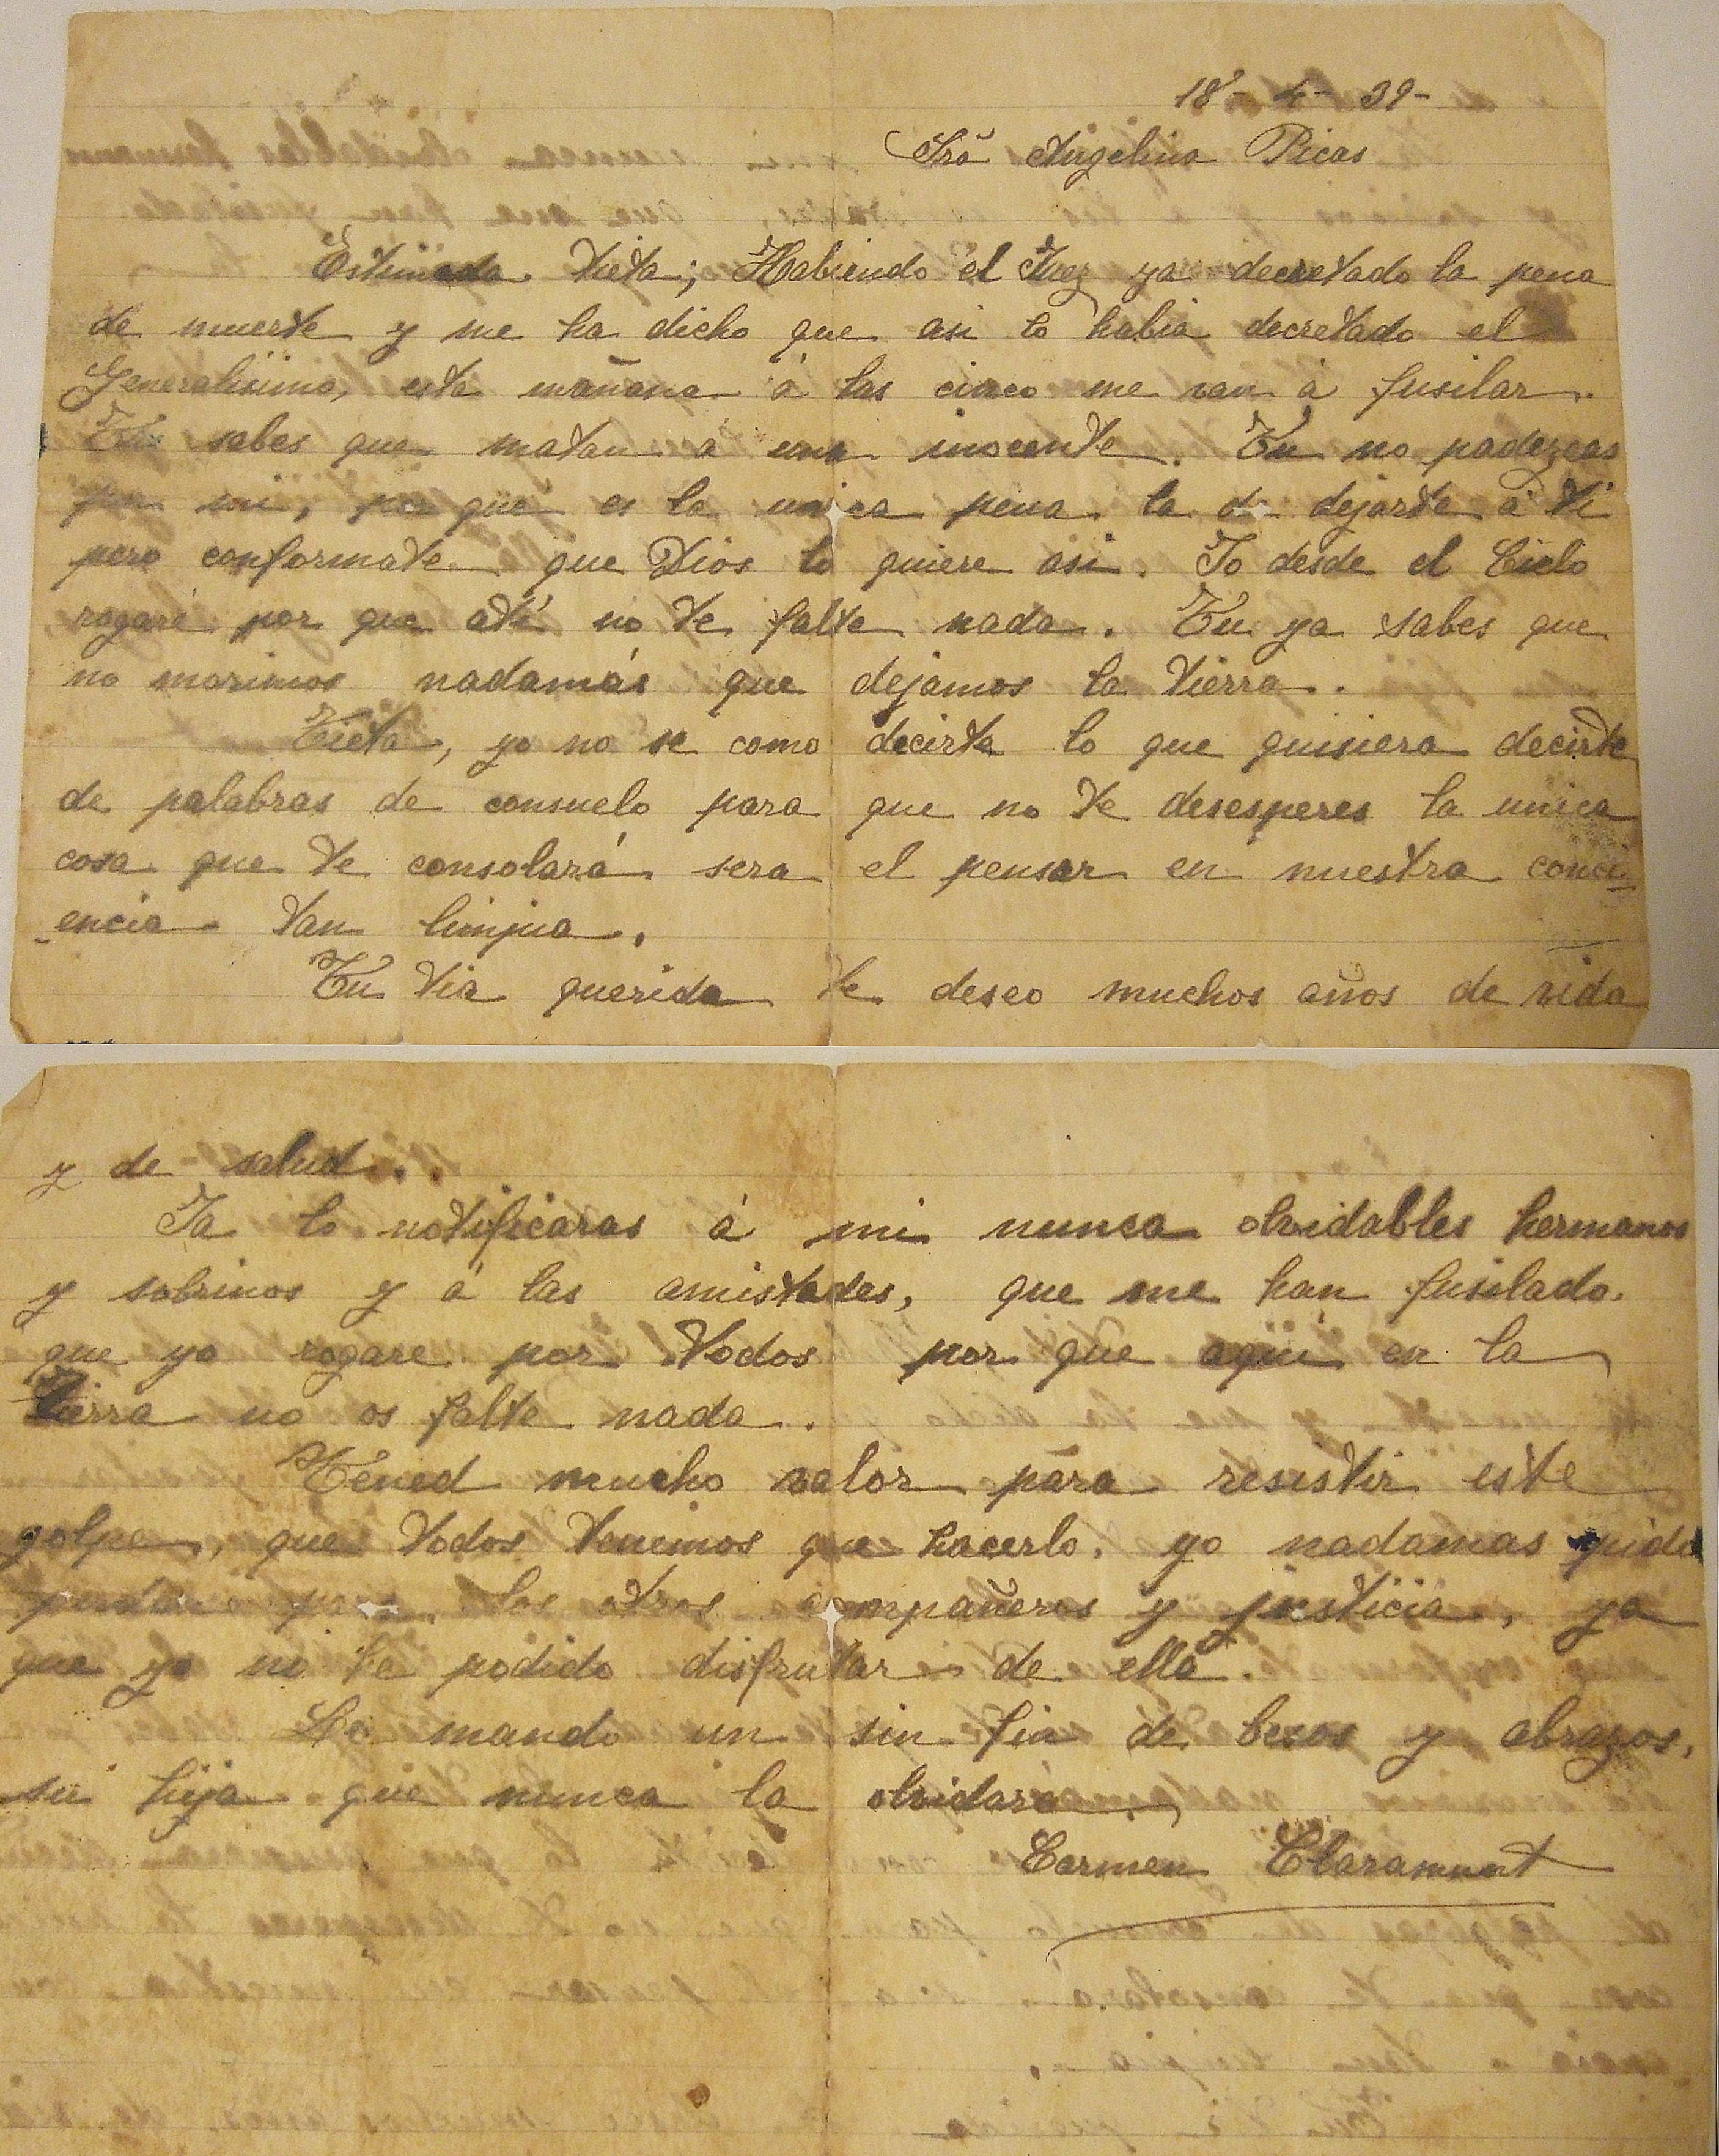 Archivo de Joan Mercadé Rius. Transcripción de la carta de despedida de Carme Claramunt a Angelina Picas Coromina.